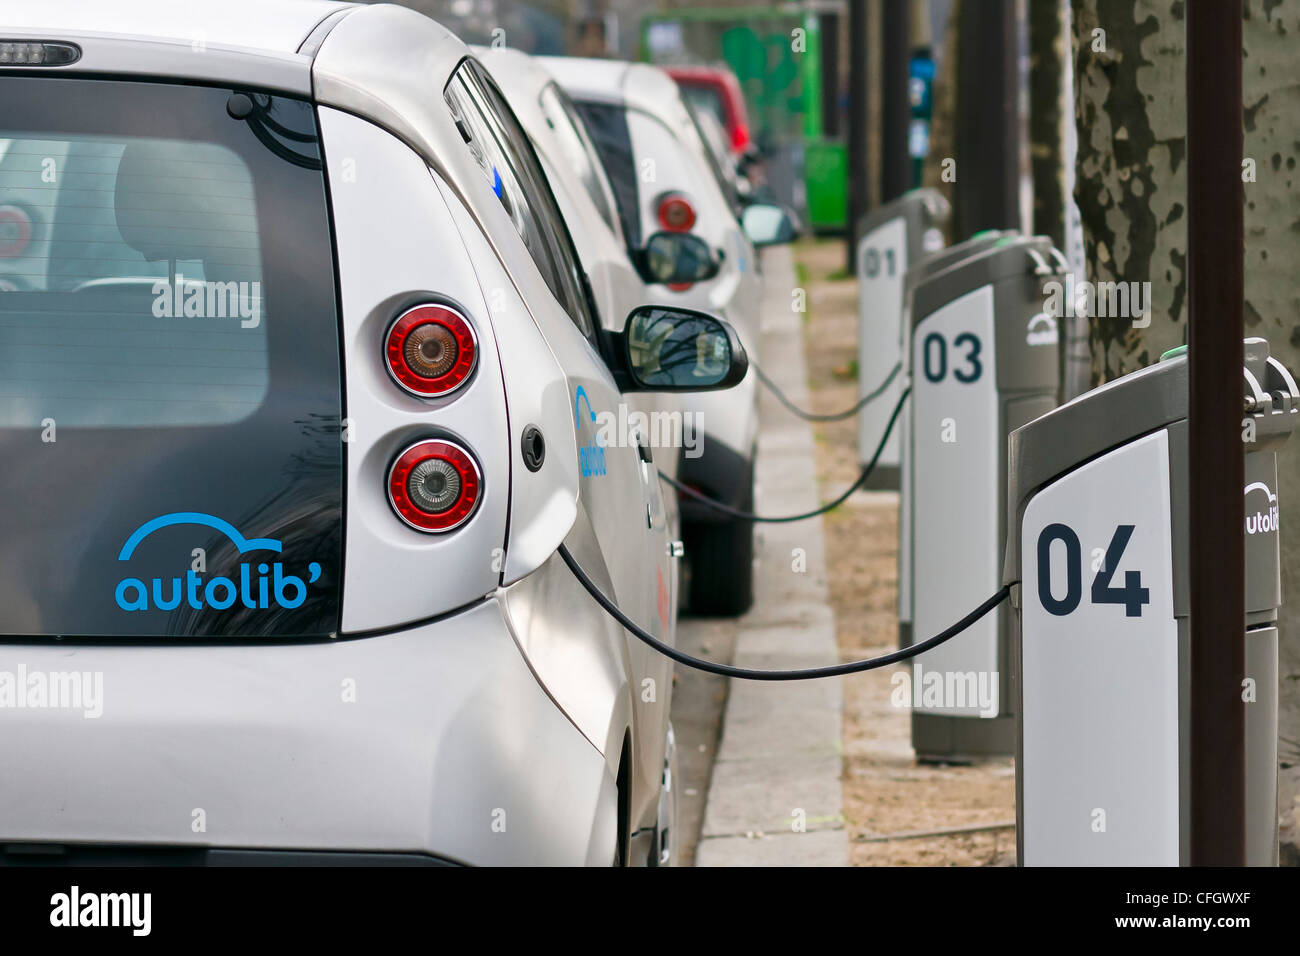 Autolib self service electric car rental Paris France Stock Photo - Alamy